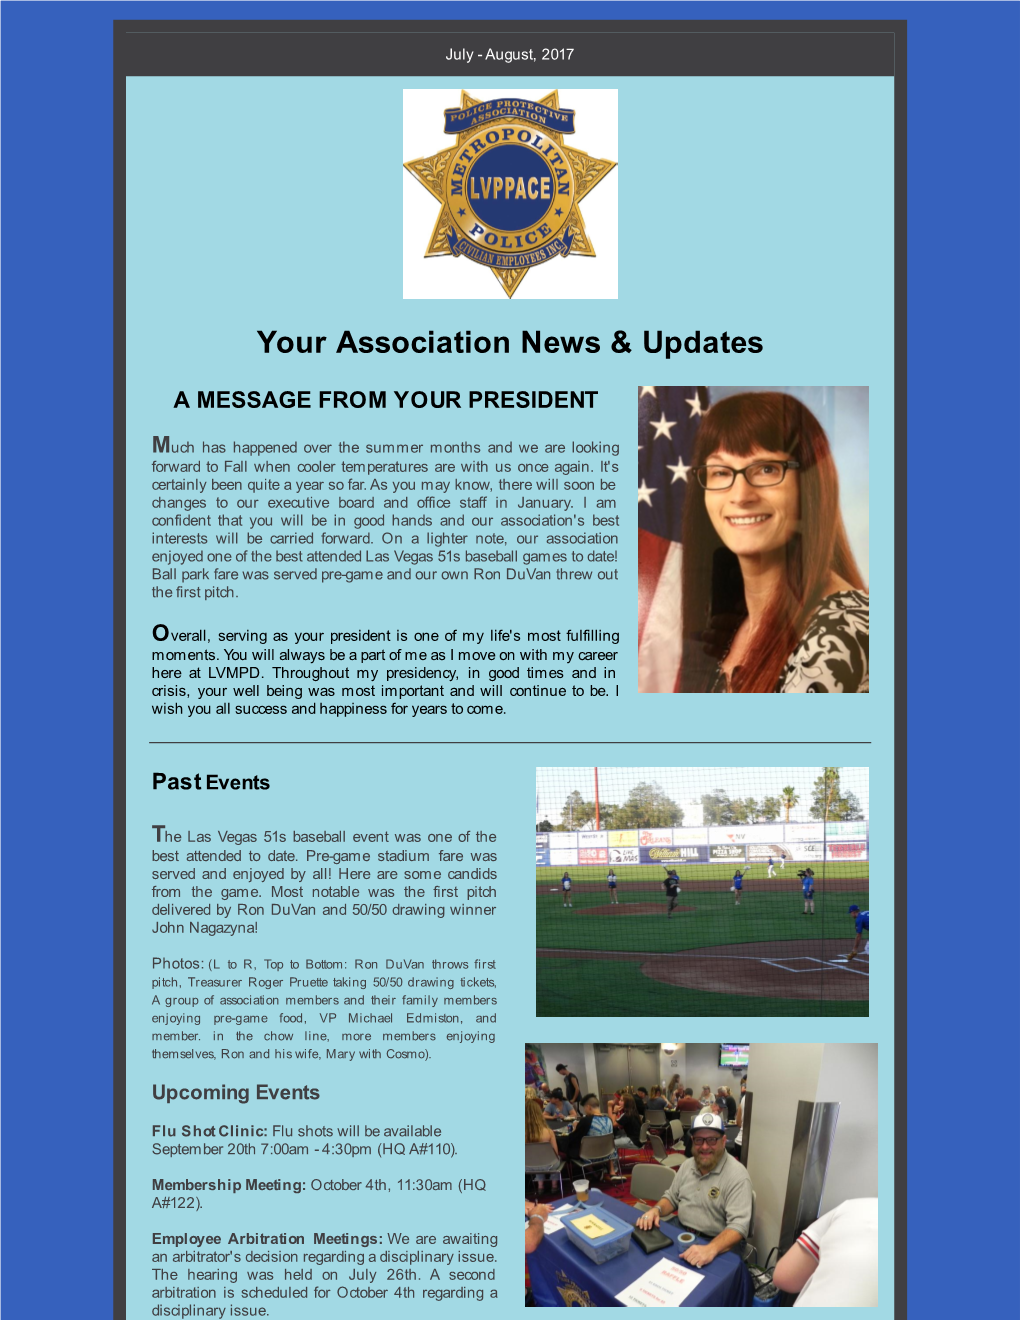 Your Association News & Updates